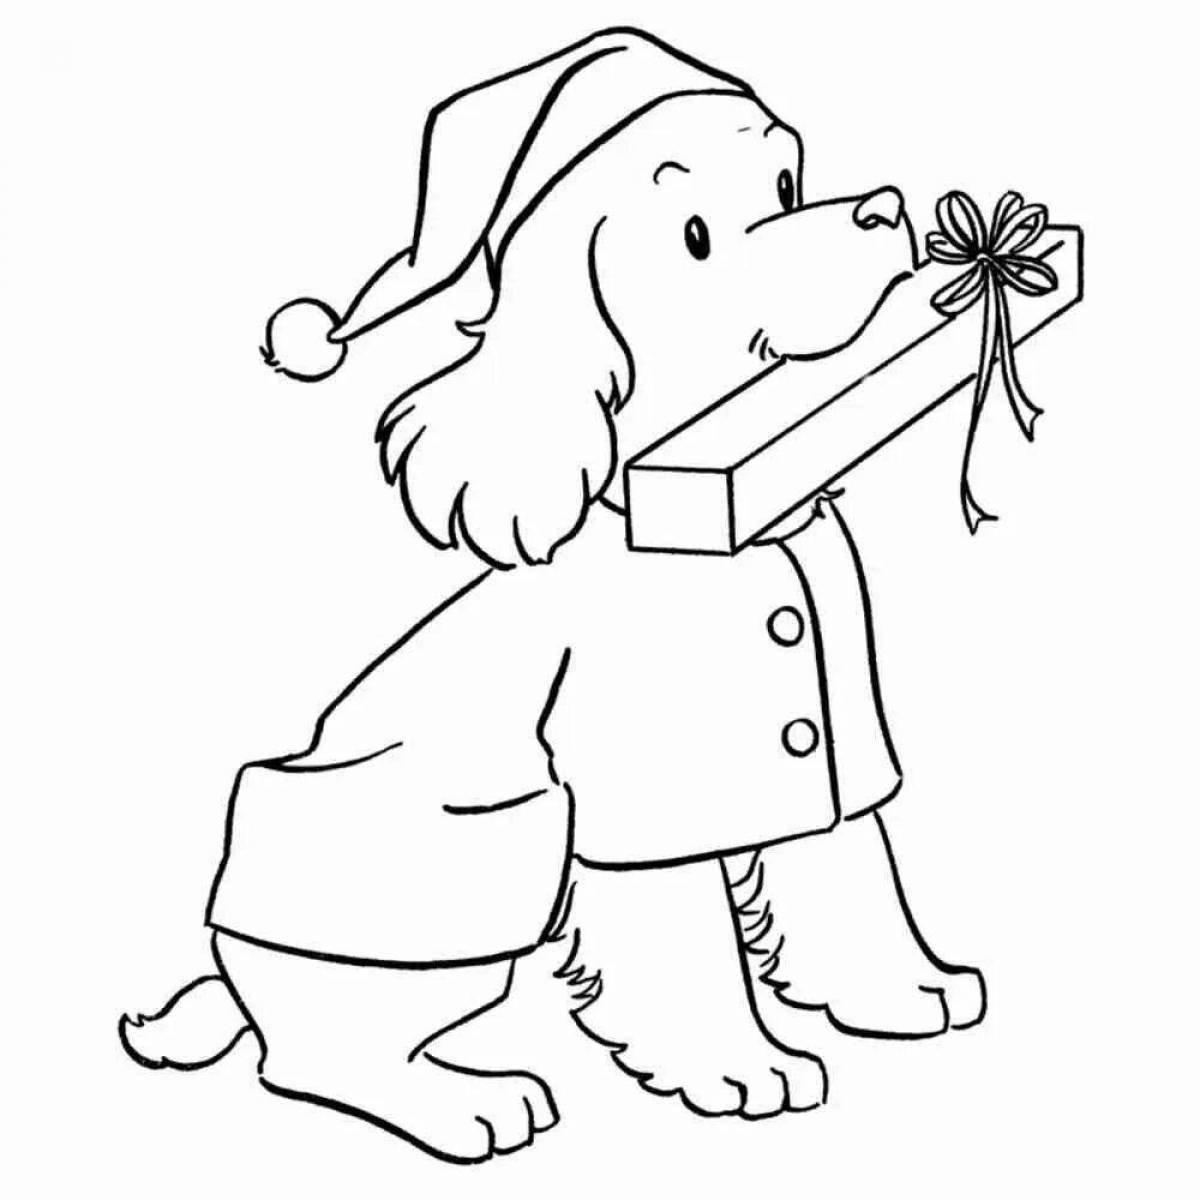 Live dog Christmas coloring book